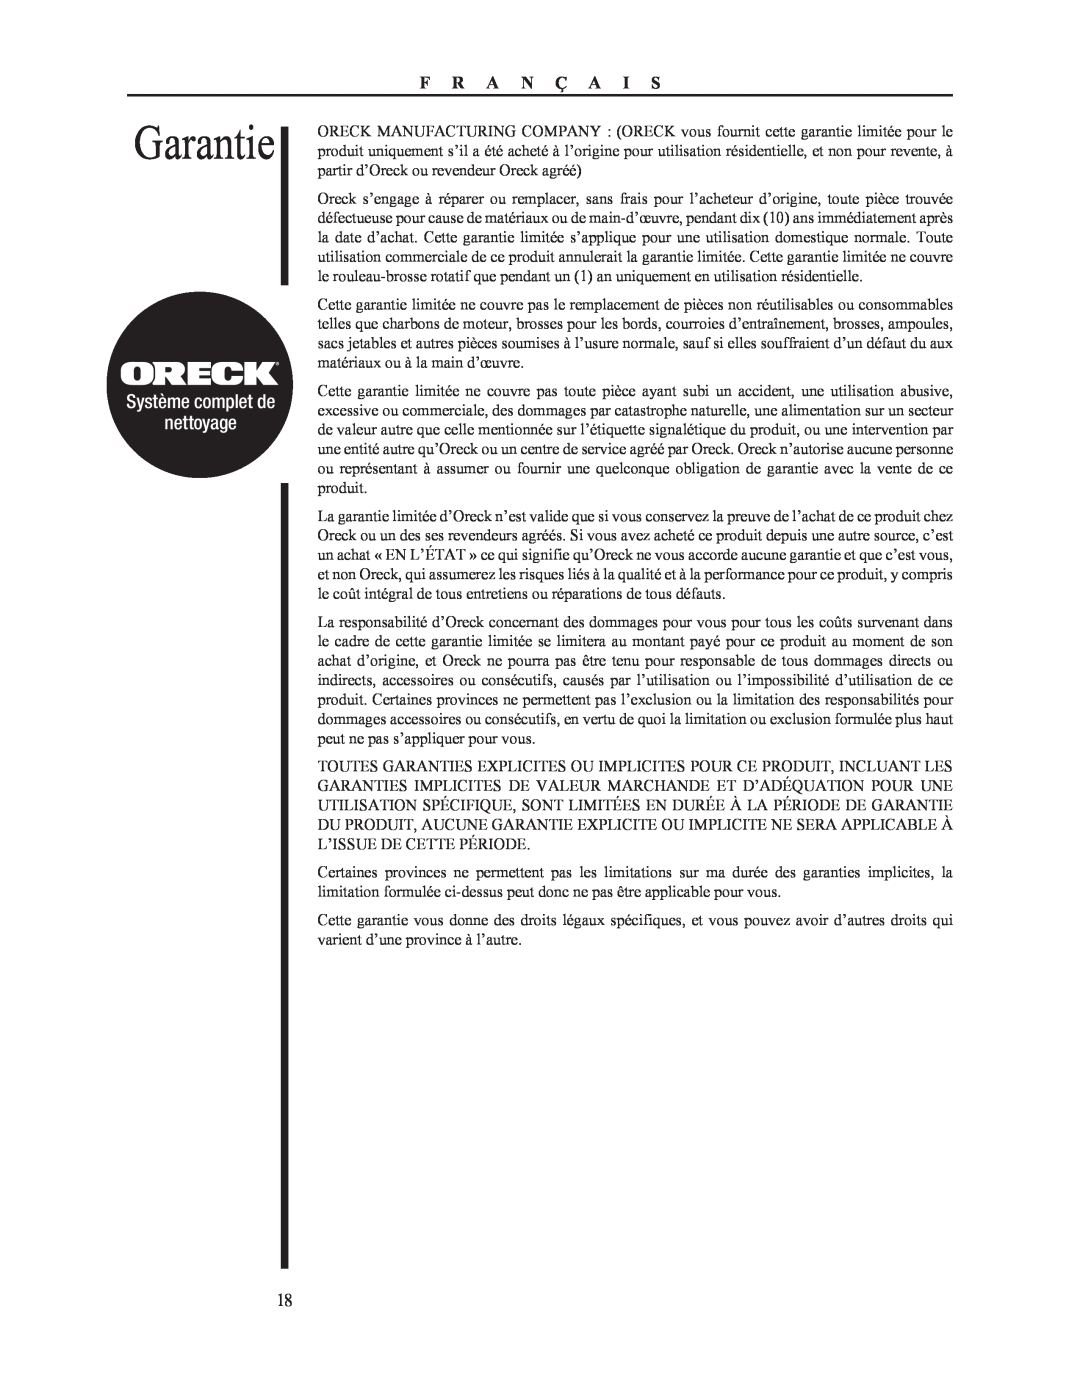 Oreck 79052-01REVA manual Garantie, Système complet de nettoyage, F R A N Ç A I S 